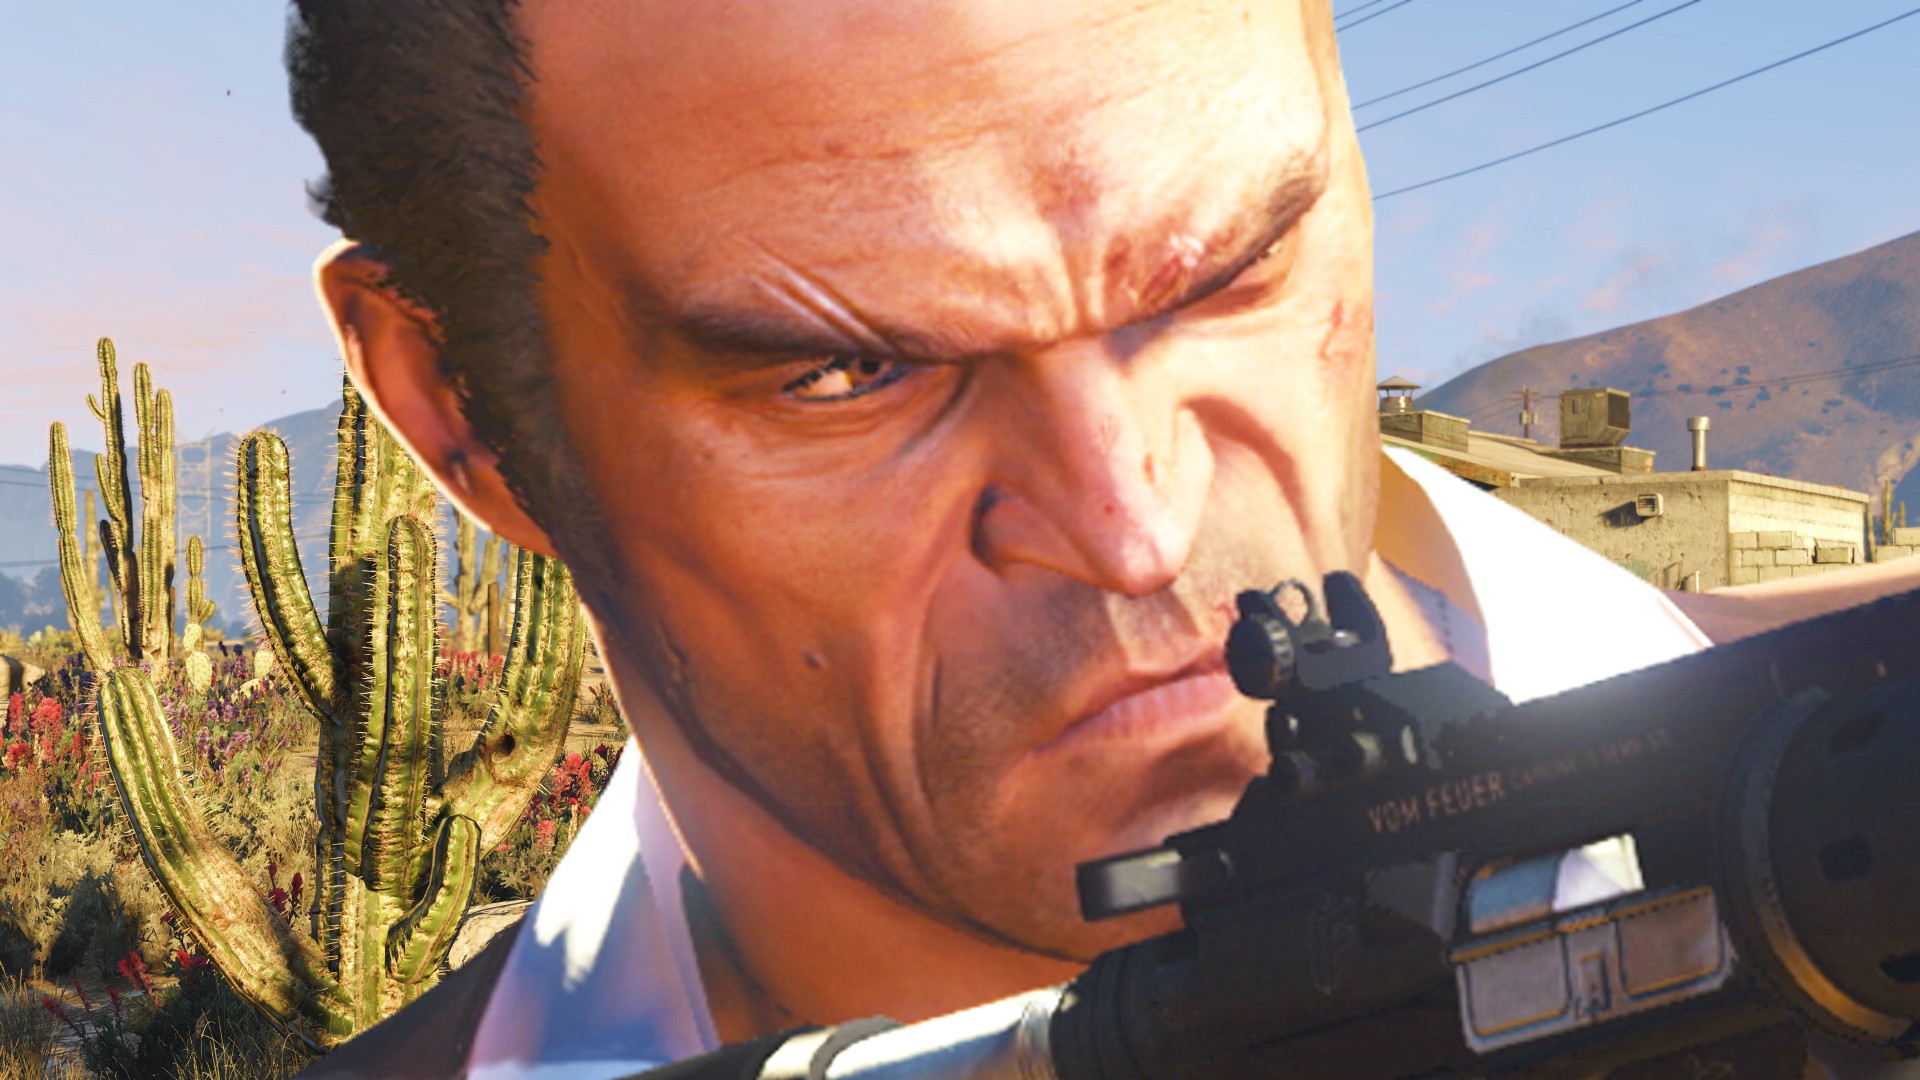 Counter-Strike - Metacritic